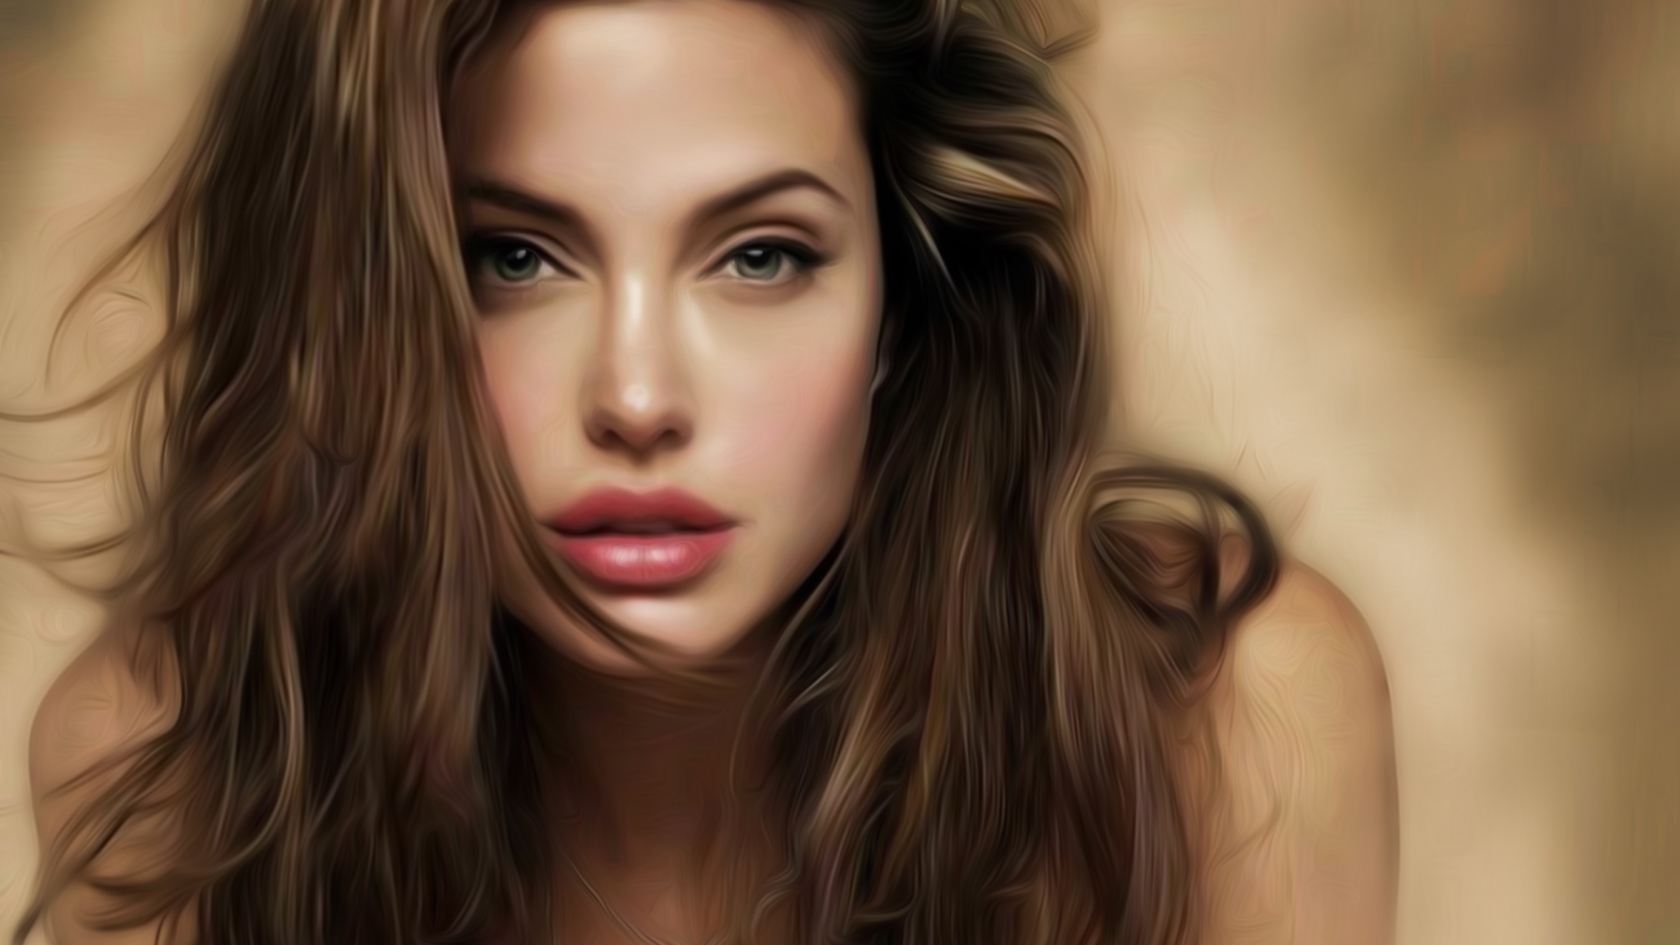 Angelina Jolie Look Art for 1680 x 945 HDTV resolution